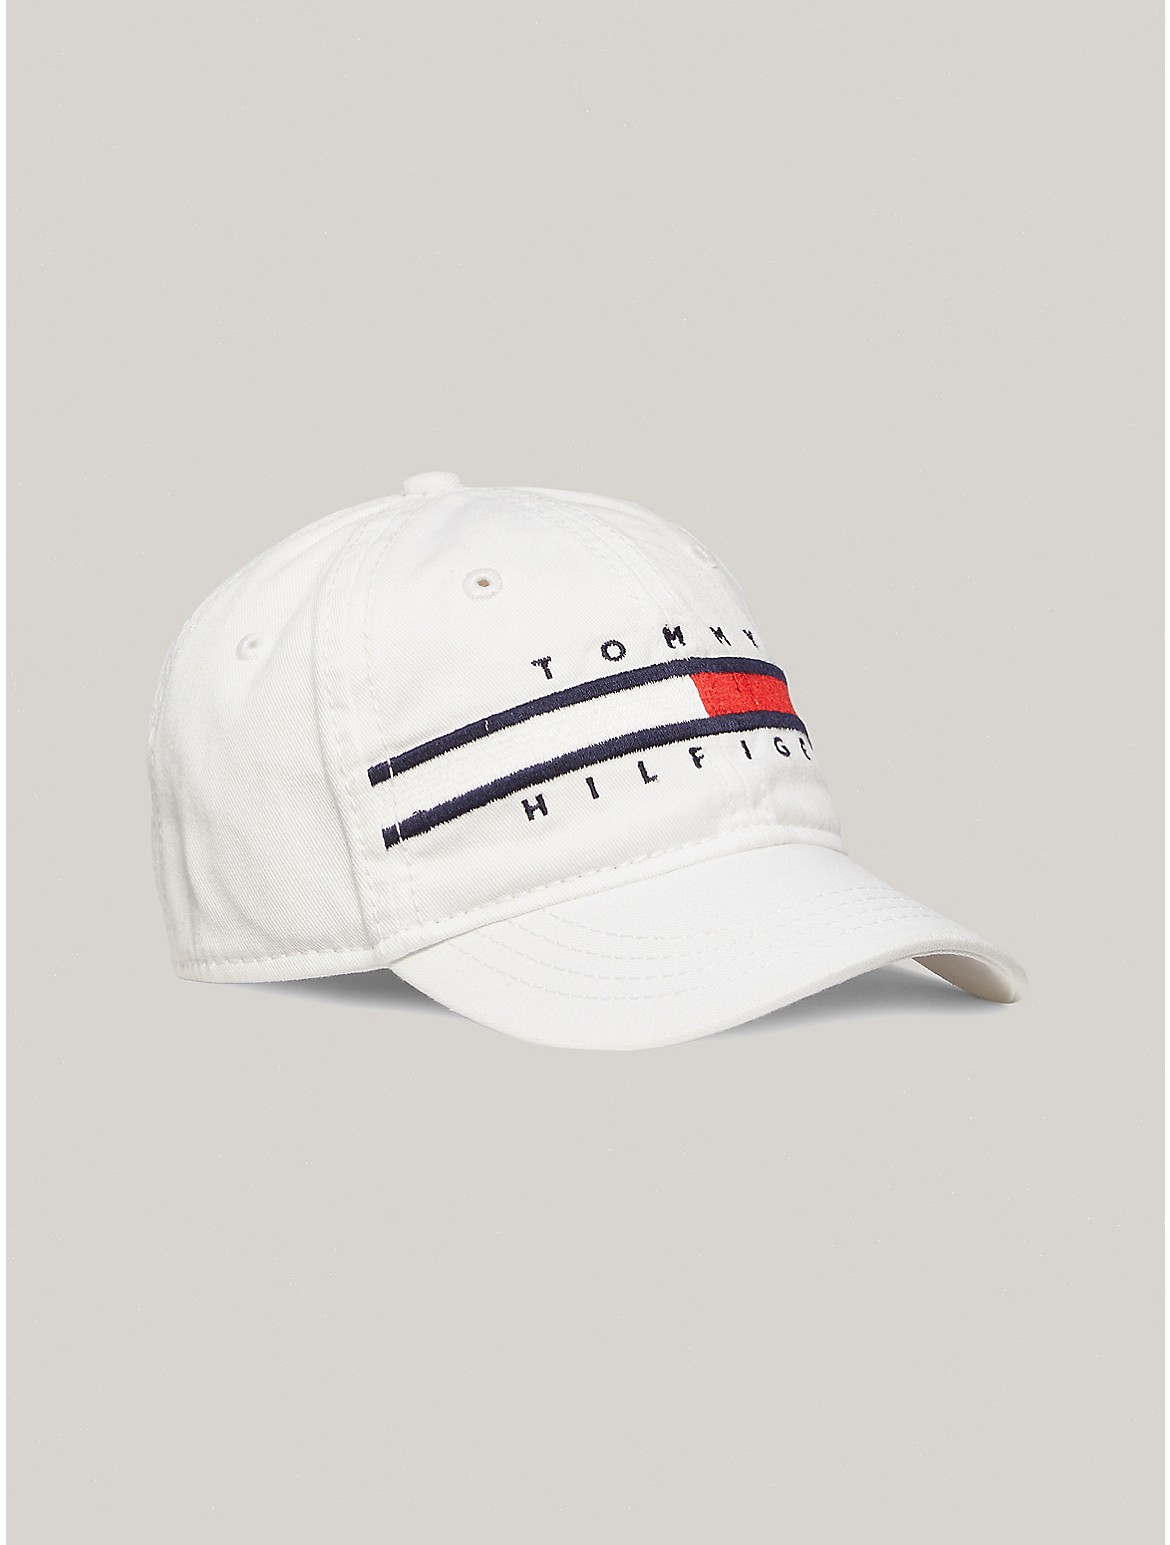 Tommy Hilfiger Kids' Flag Stripe Logo Baseball Cap - White - S